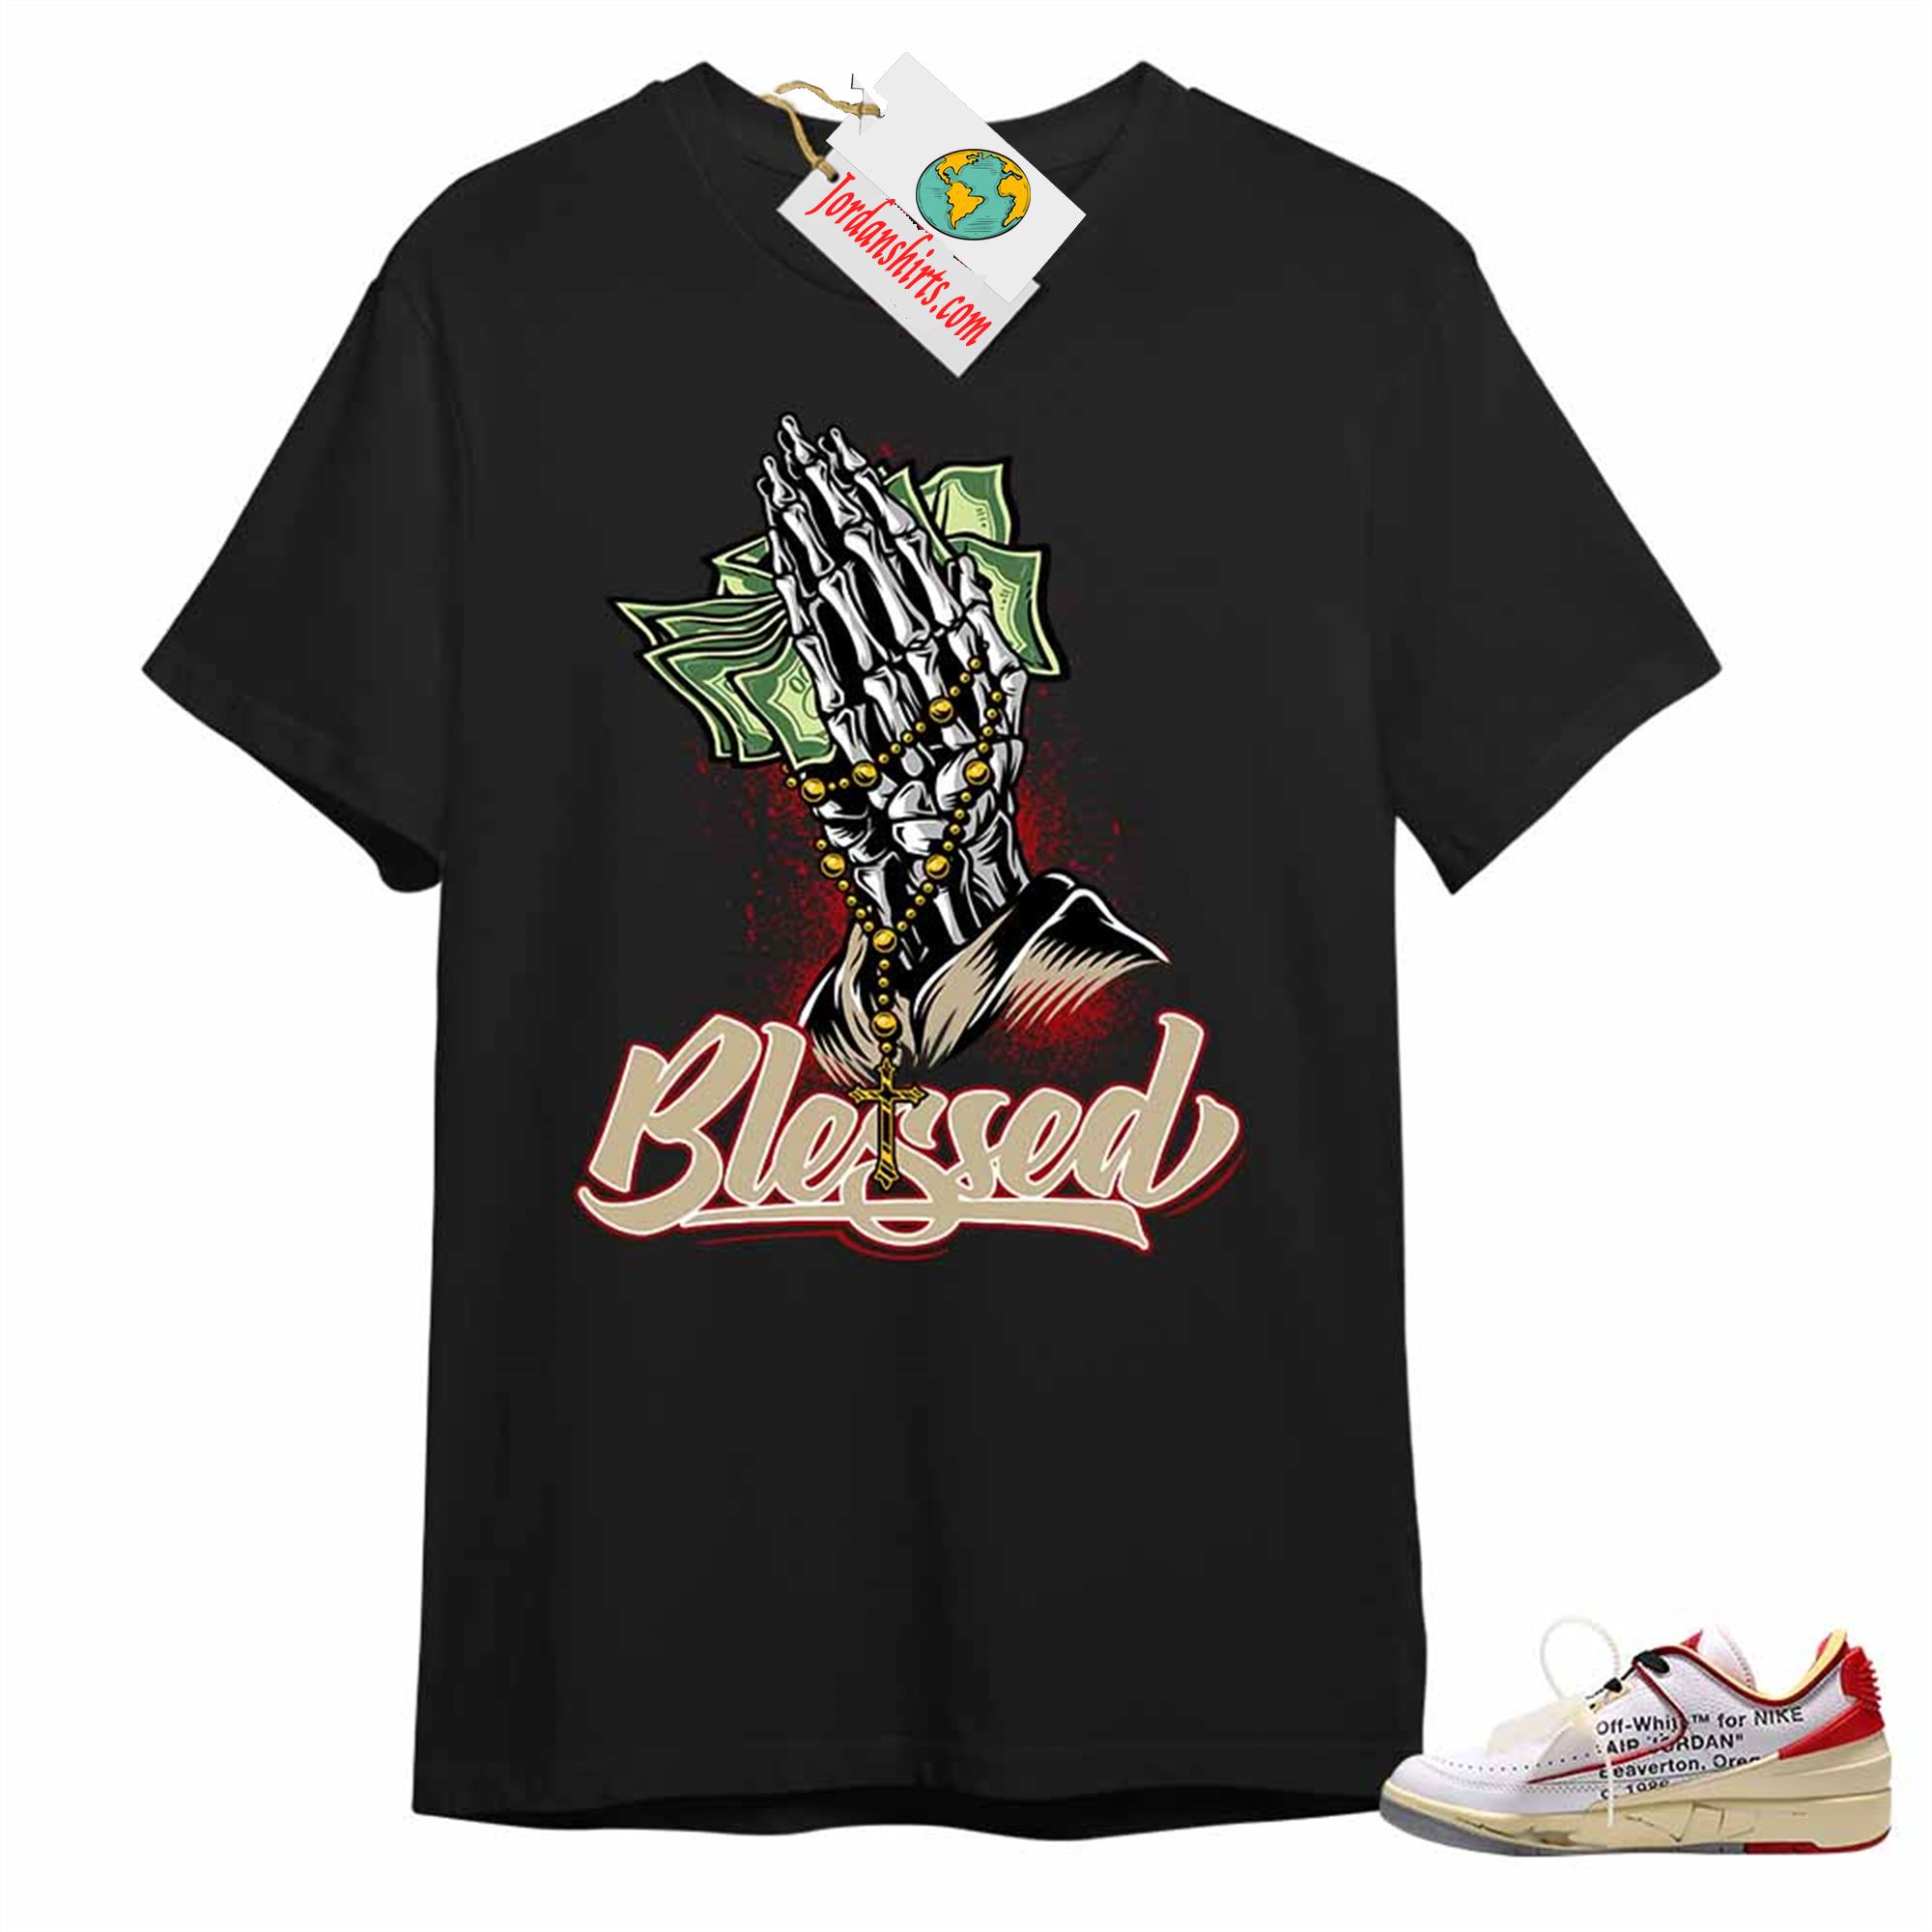 Jordan 2 Shirt, Blessed Pray Hand Money Black Air Jordan 2 Low White Red Off-white 2s Size Up To 5xl